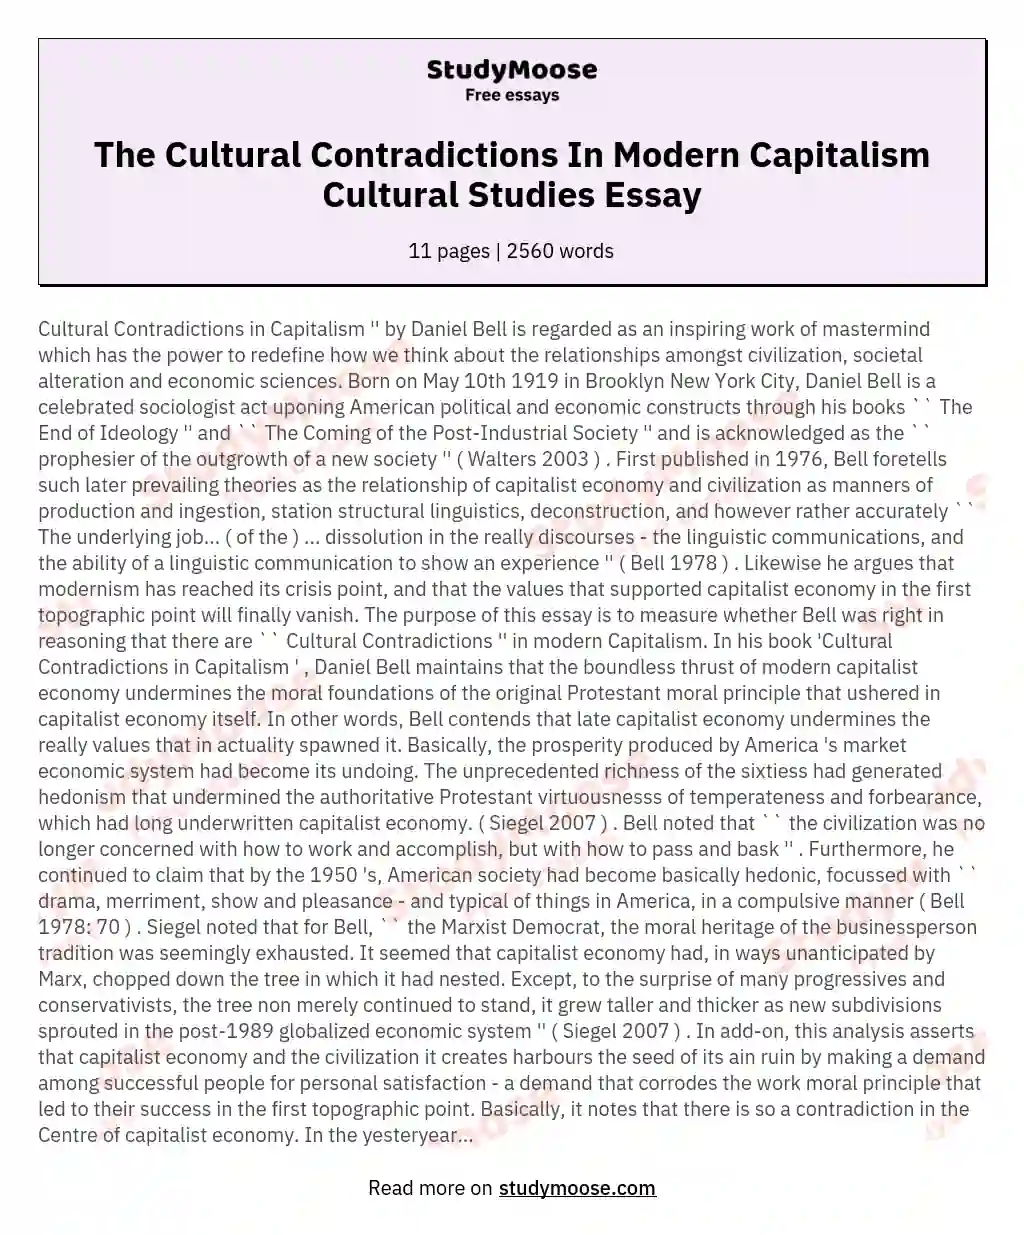 The Cultural Contradictions In Modern Capitalism Cultural Studies Essay essay